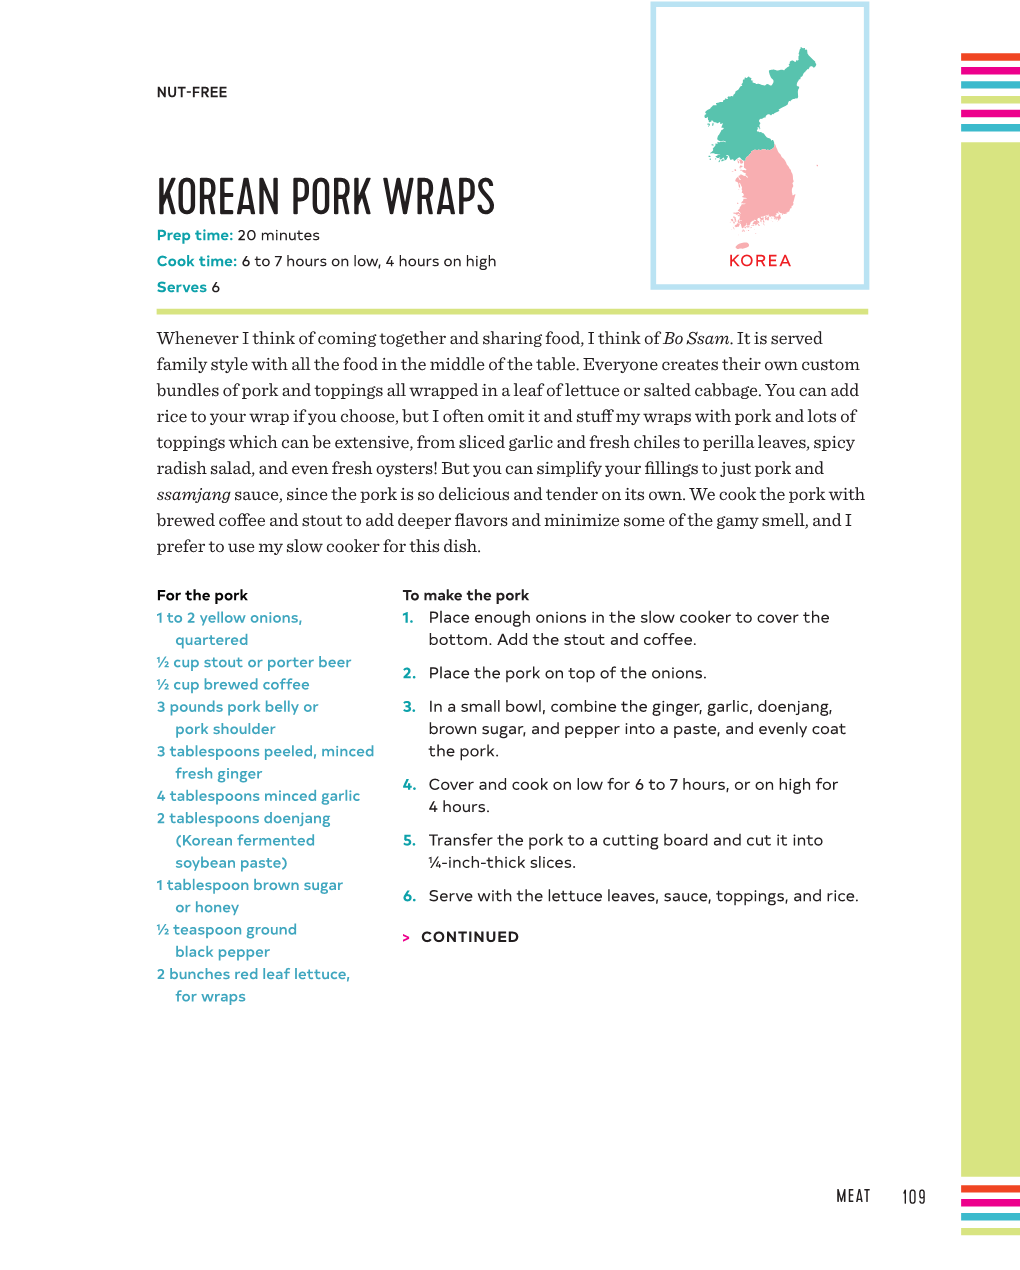 KOREAN PORK WRAPS Prep Time: 20 Minutes Cook Time: 6 to 7 Hours on Low, 4 Hours on High KOREA Serves 6